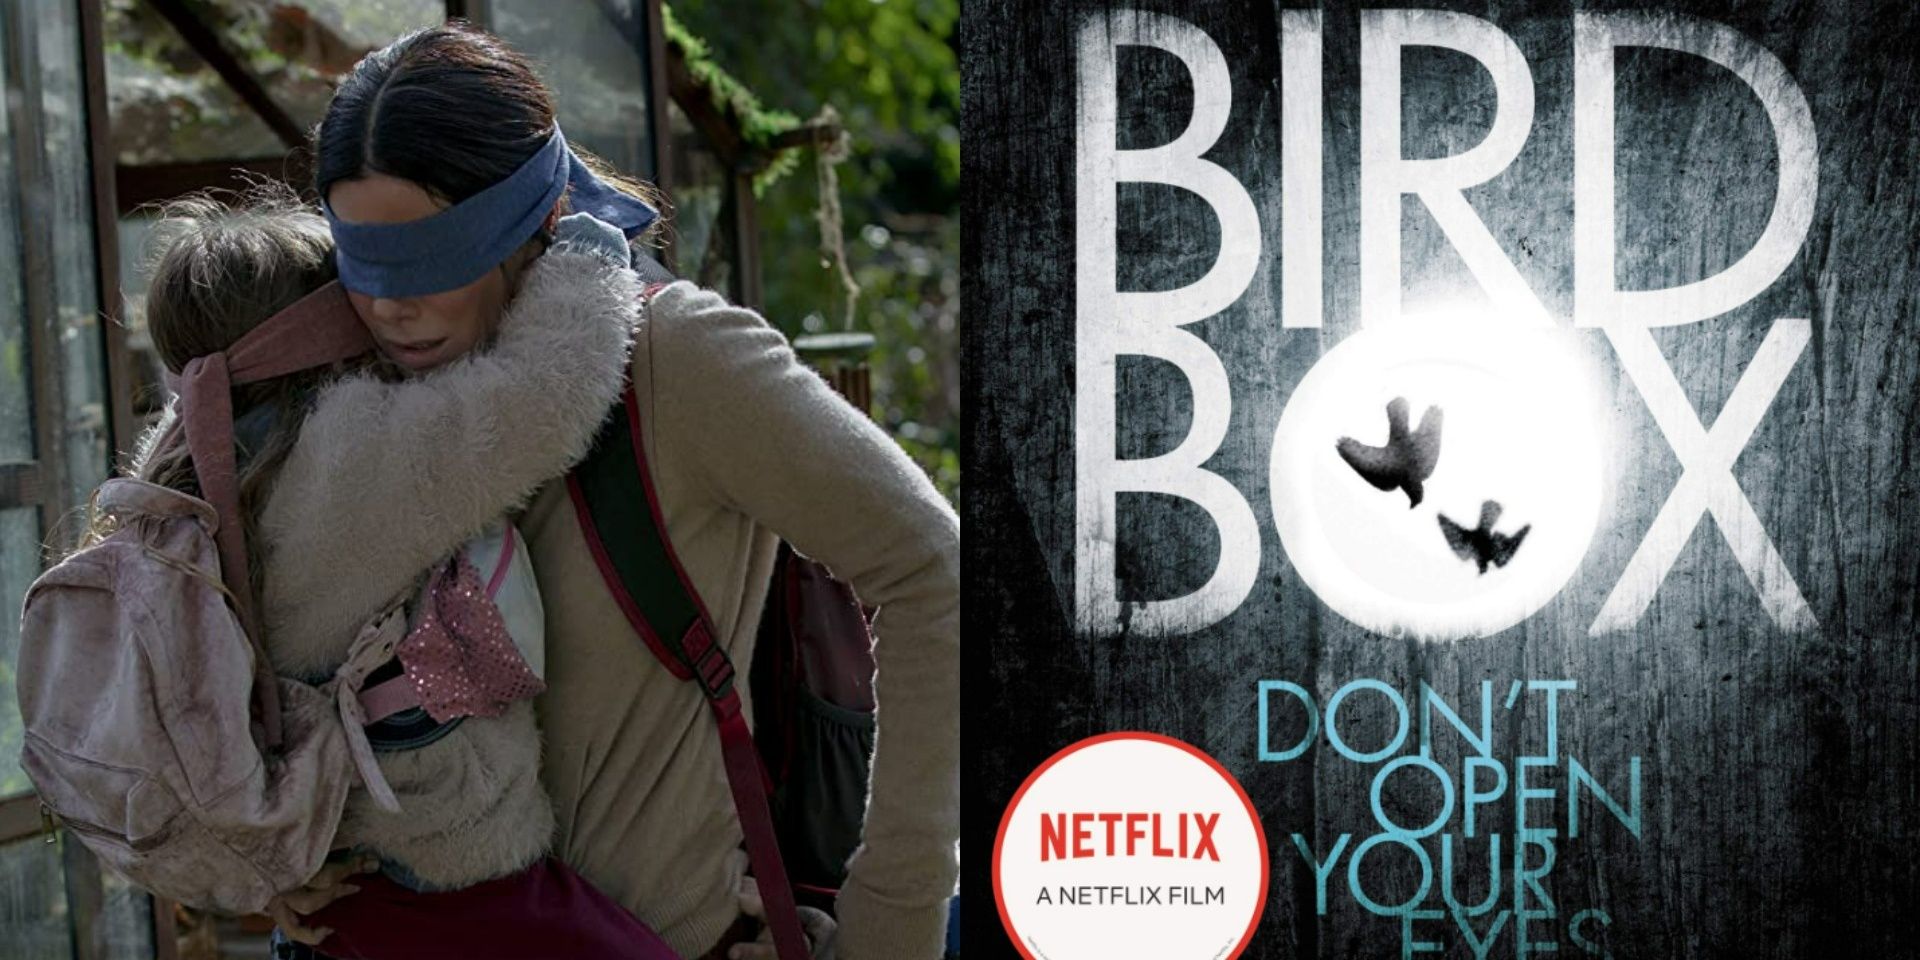 (Left) Malorie holding one of her children, blindfolded / (Right) Bird Box book cover, birds flying